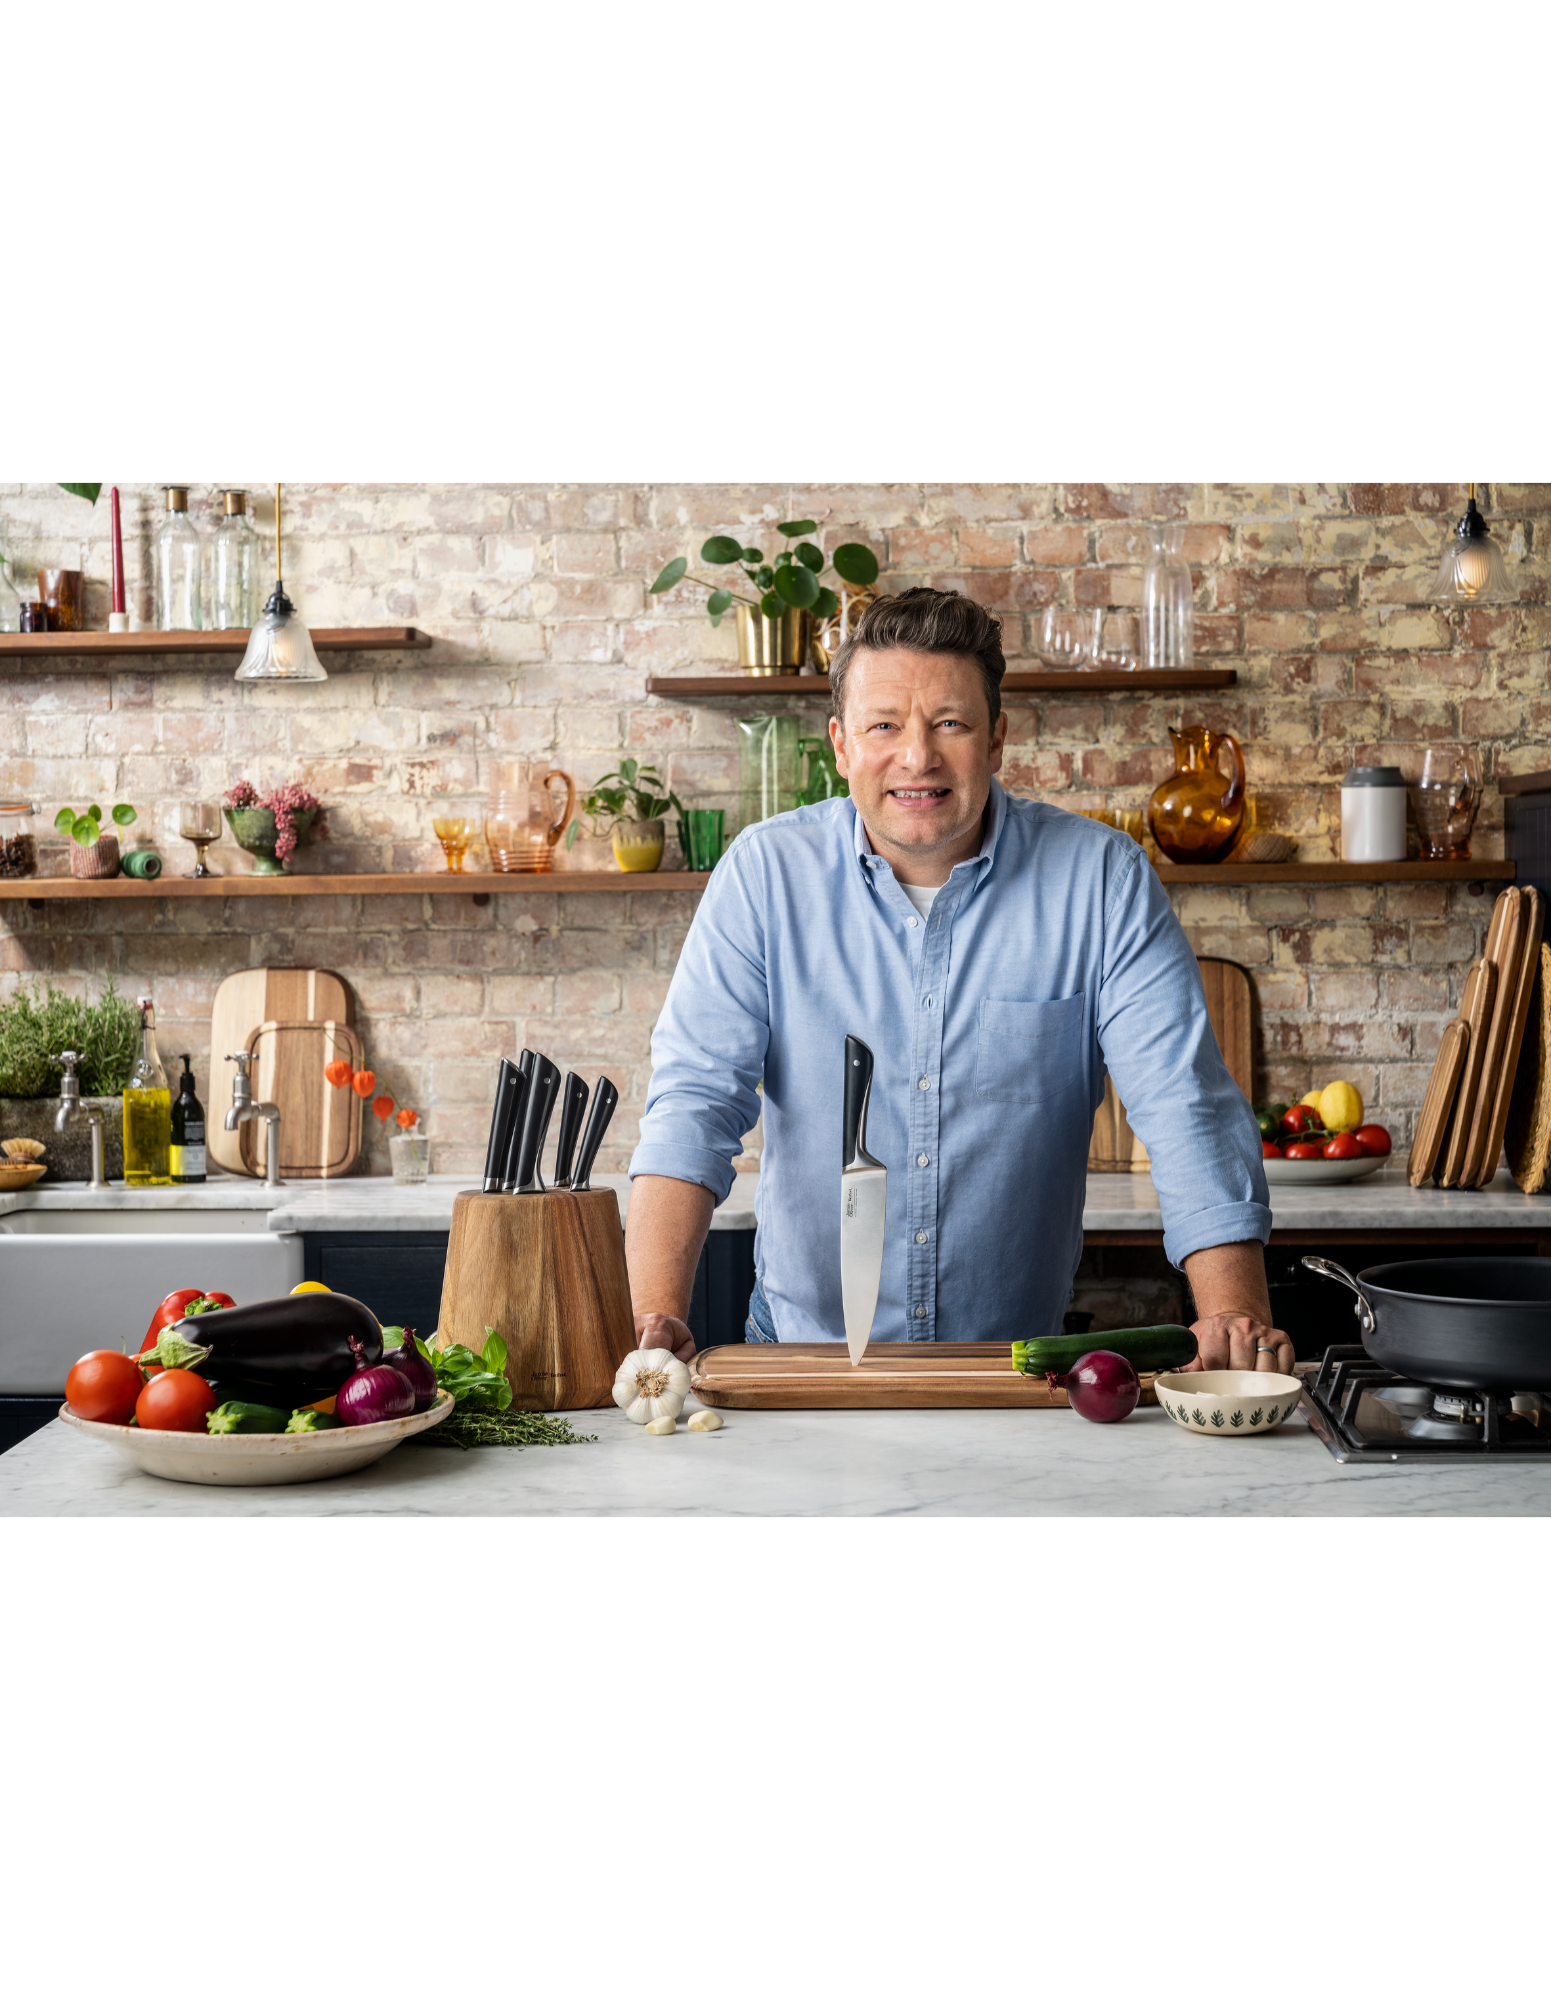 Jamie Oliver by Tefal Knife Block 5pc Set